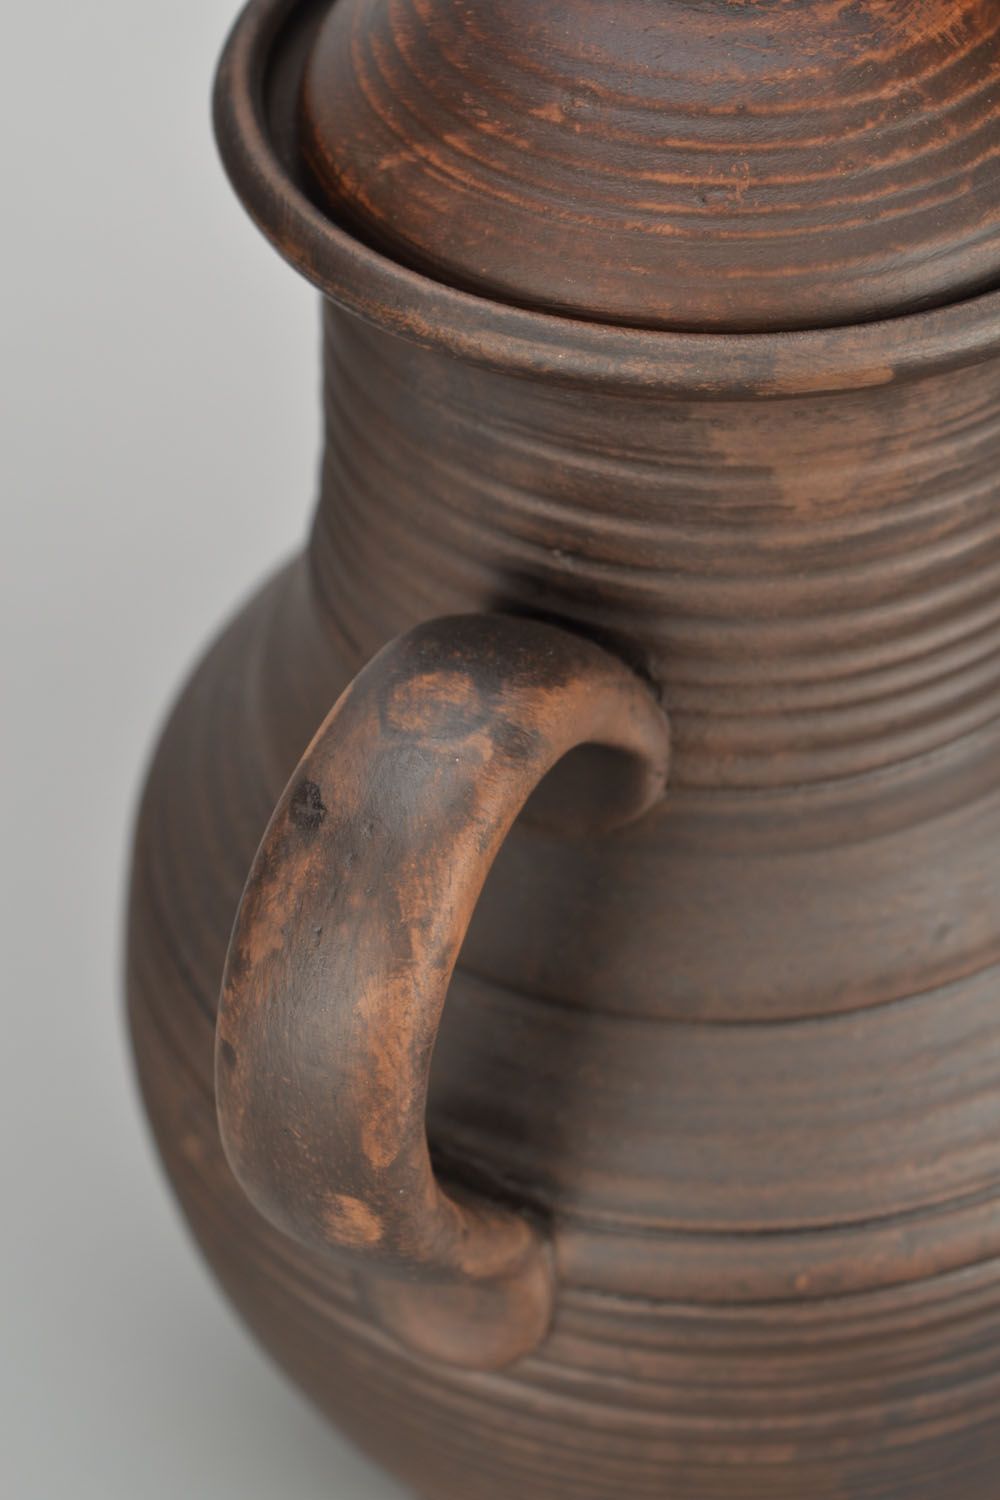 45 oz ceramic milk jug with handle and lid in dark brown color 1,87 lb photo 5